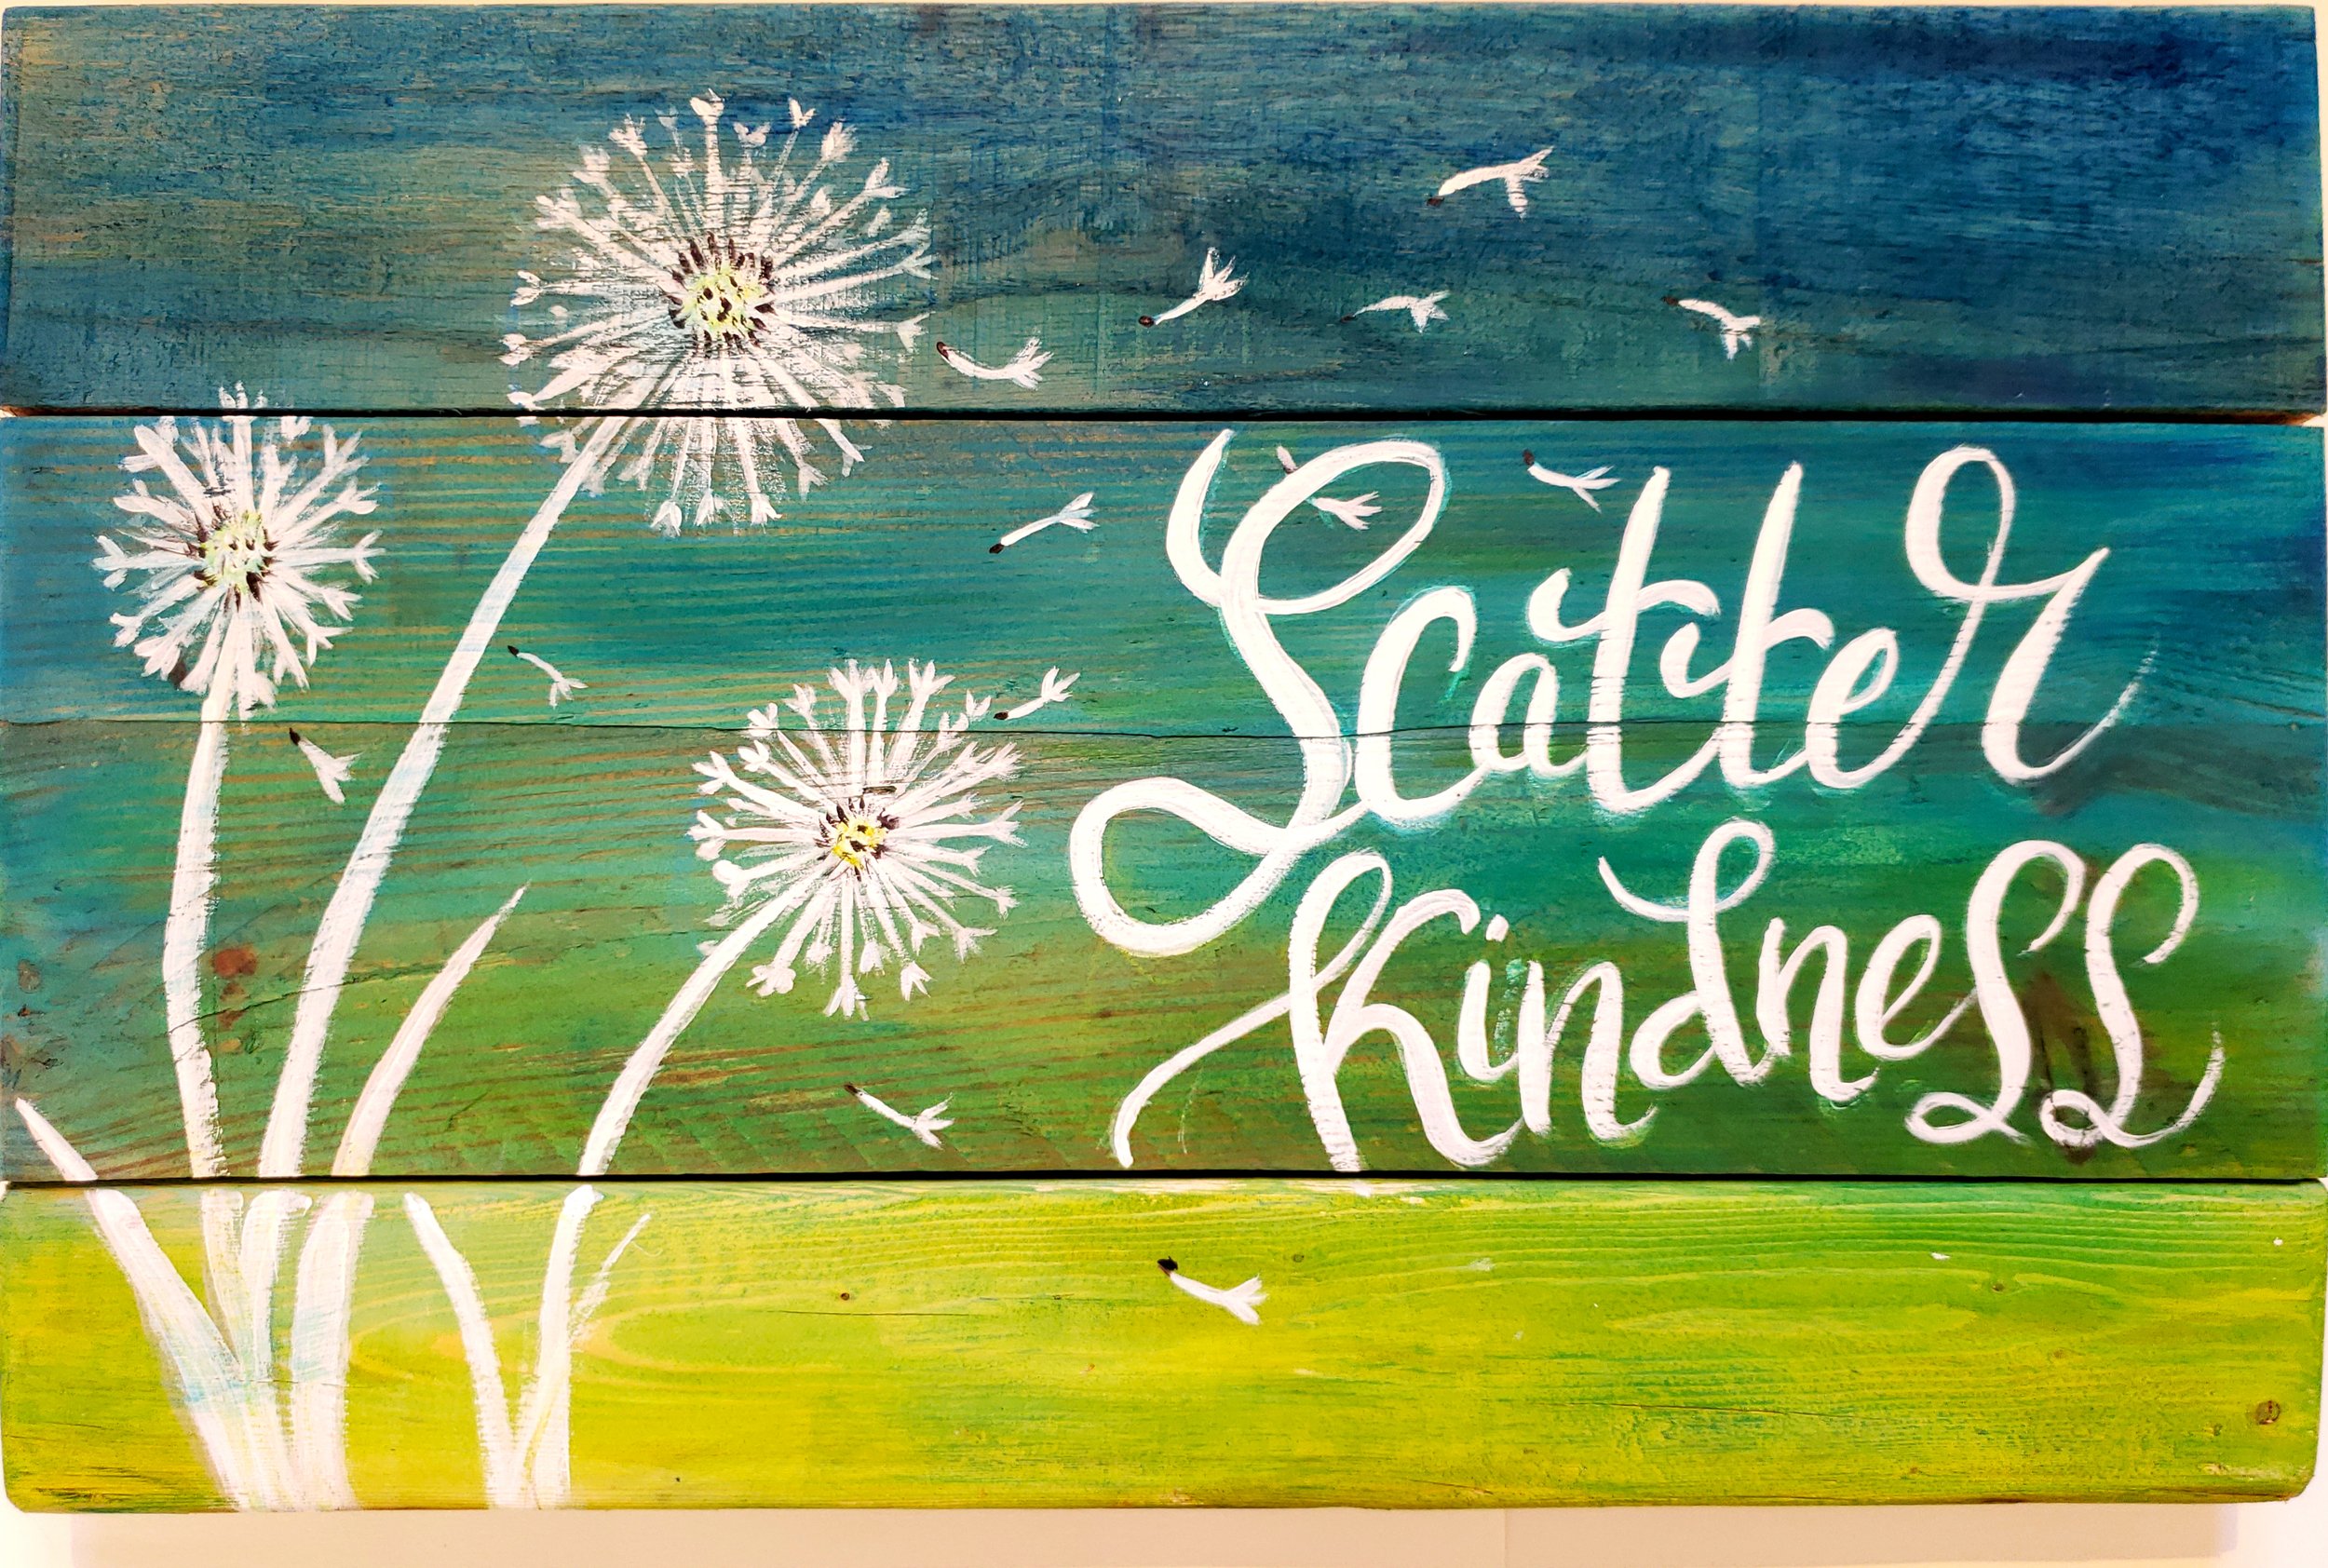 scatter kindness.jpg